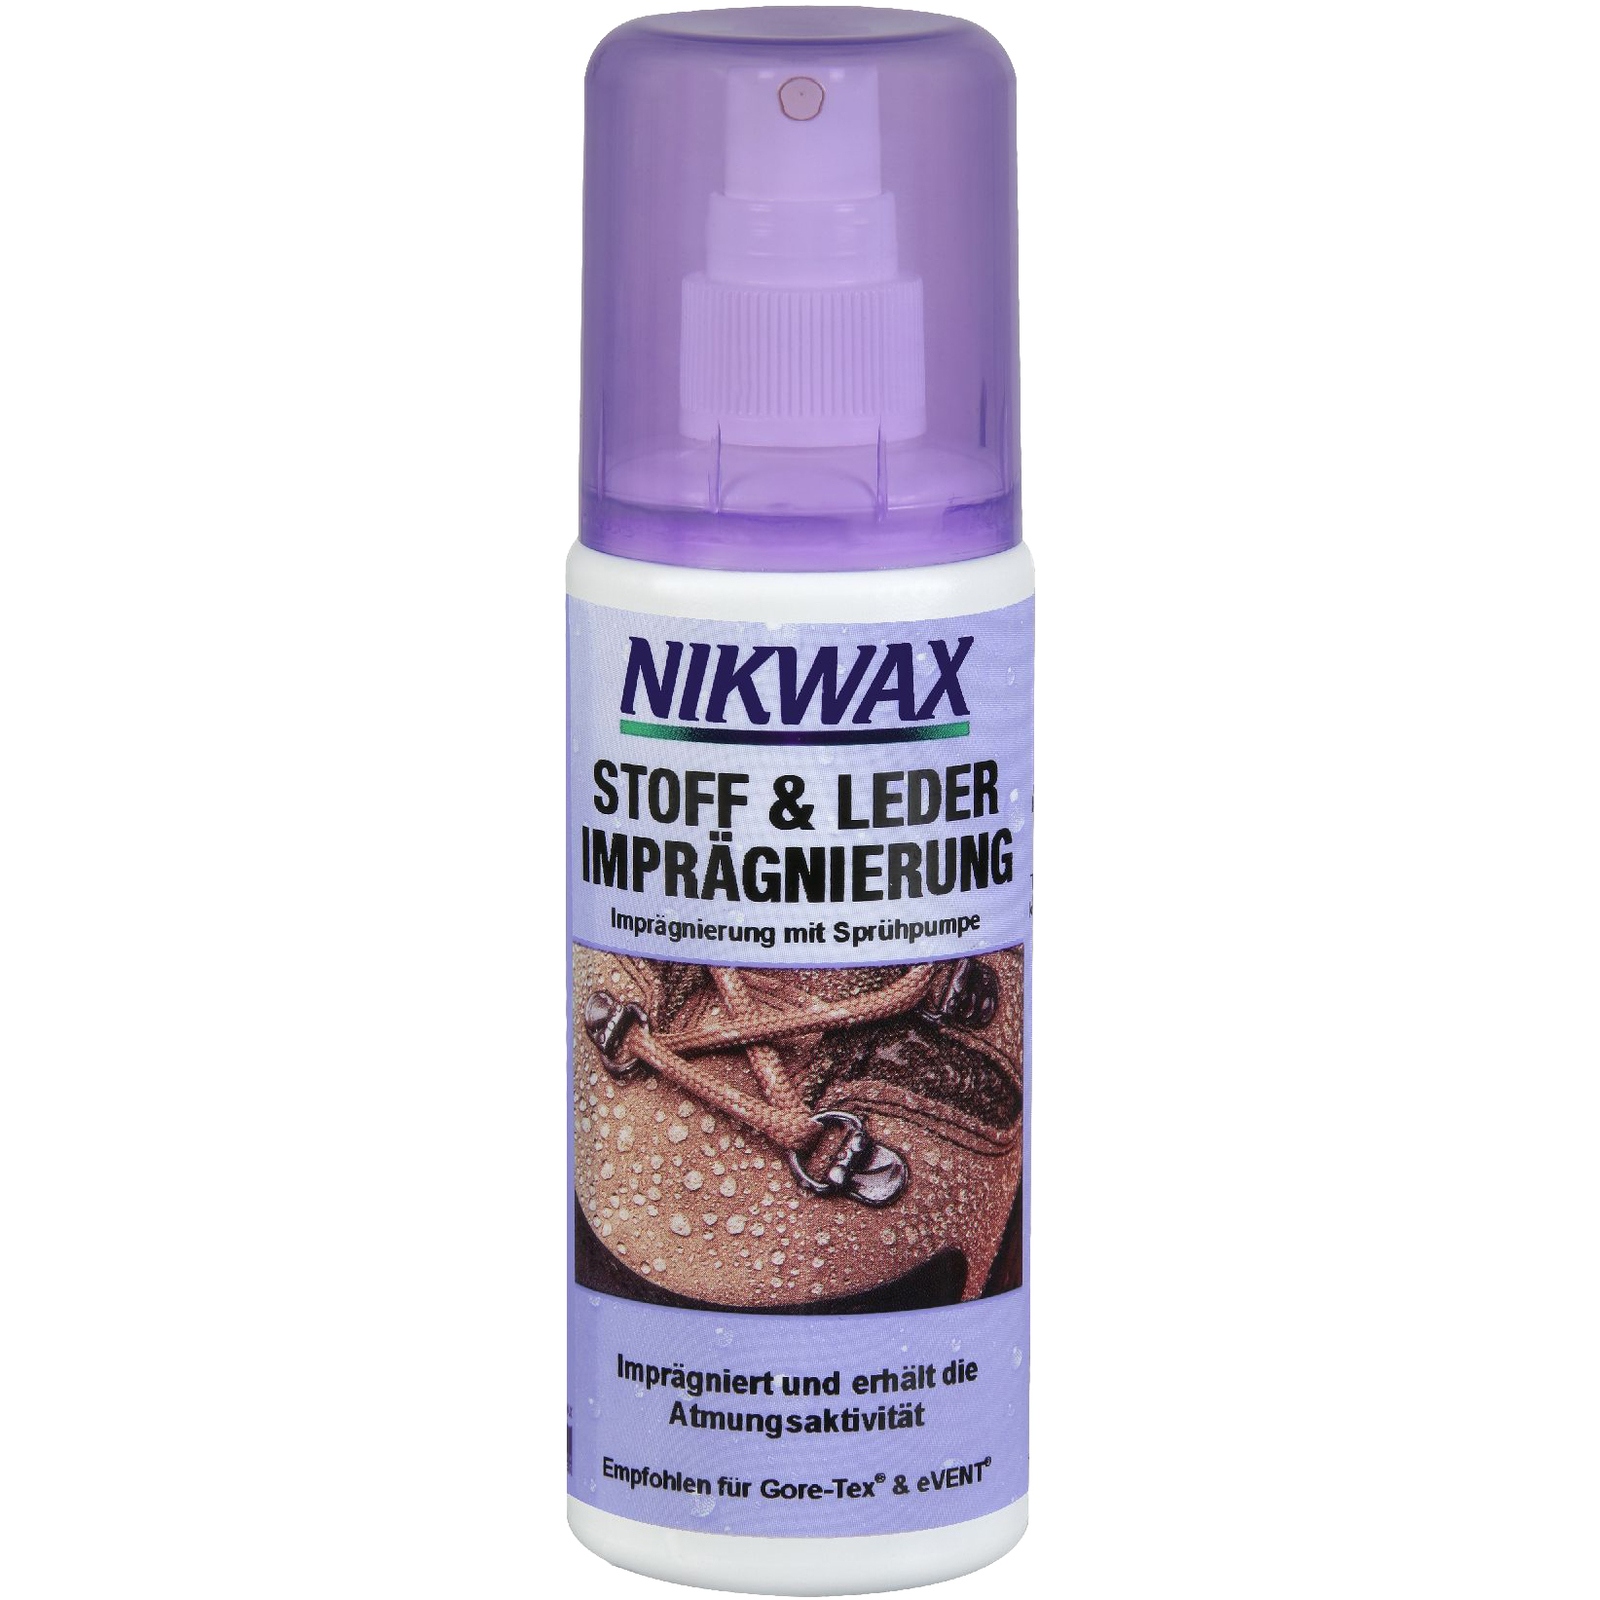 Nikwax Stoff & Leder Imprägnierung Spray 125ml